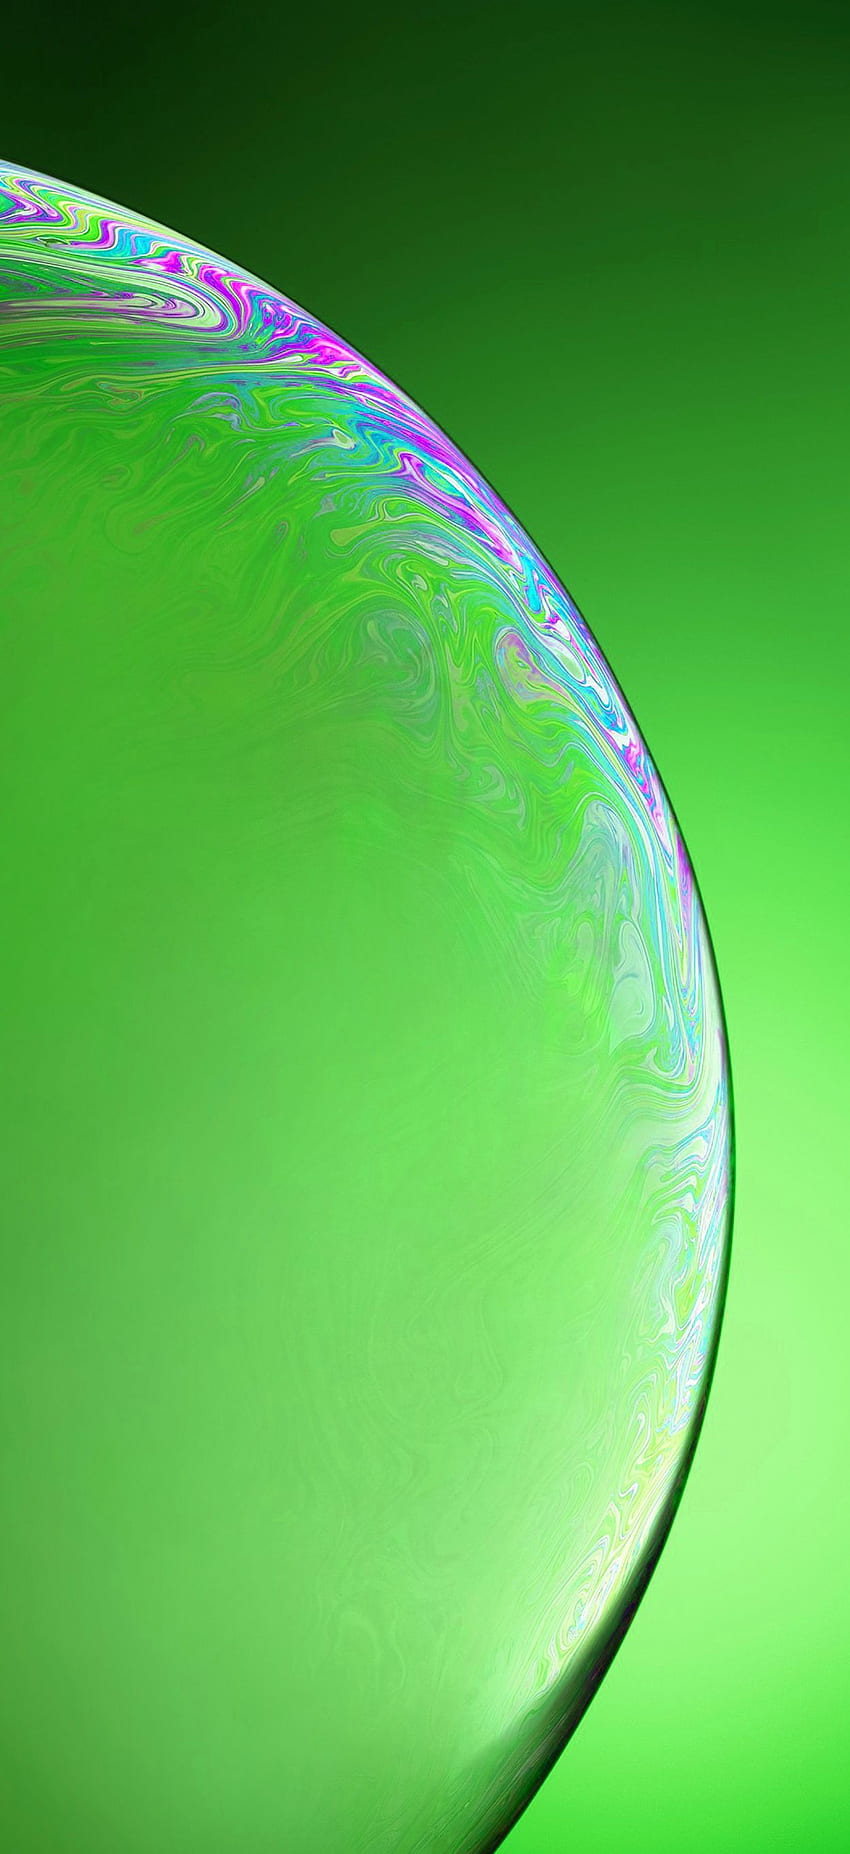 iPhone XR - Bono 2 - El color que falta (verde) - fondo de pantalla del teléfono